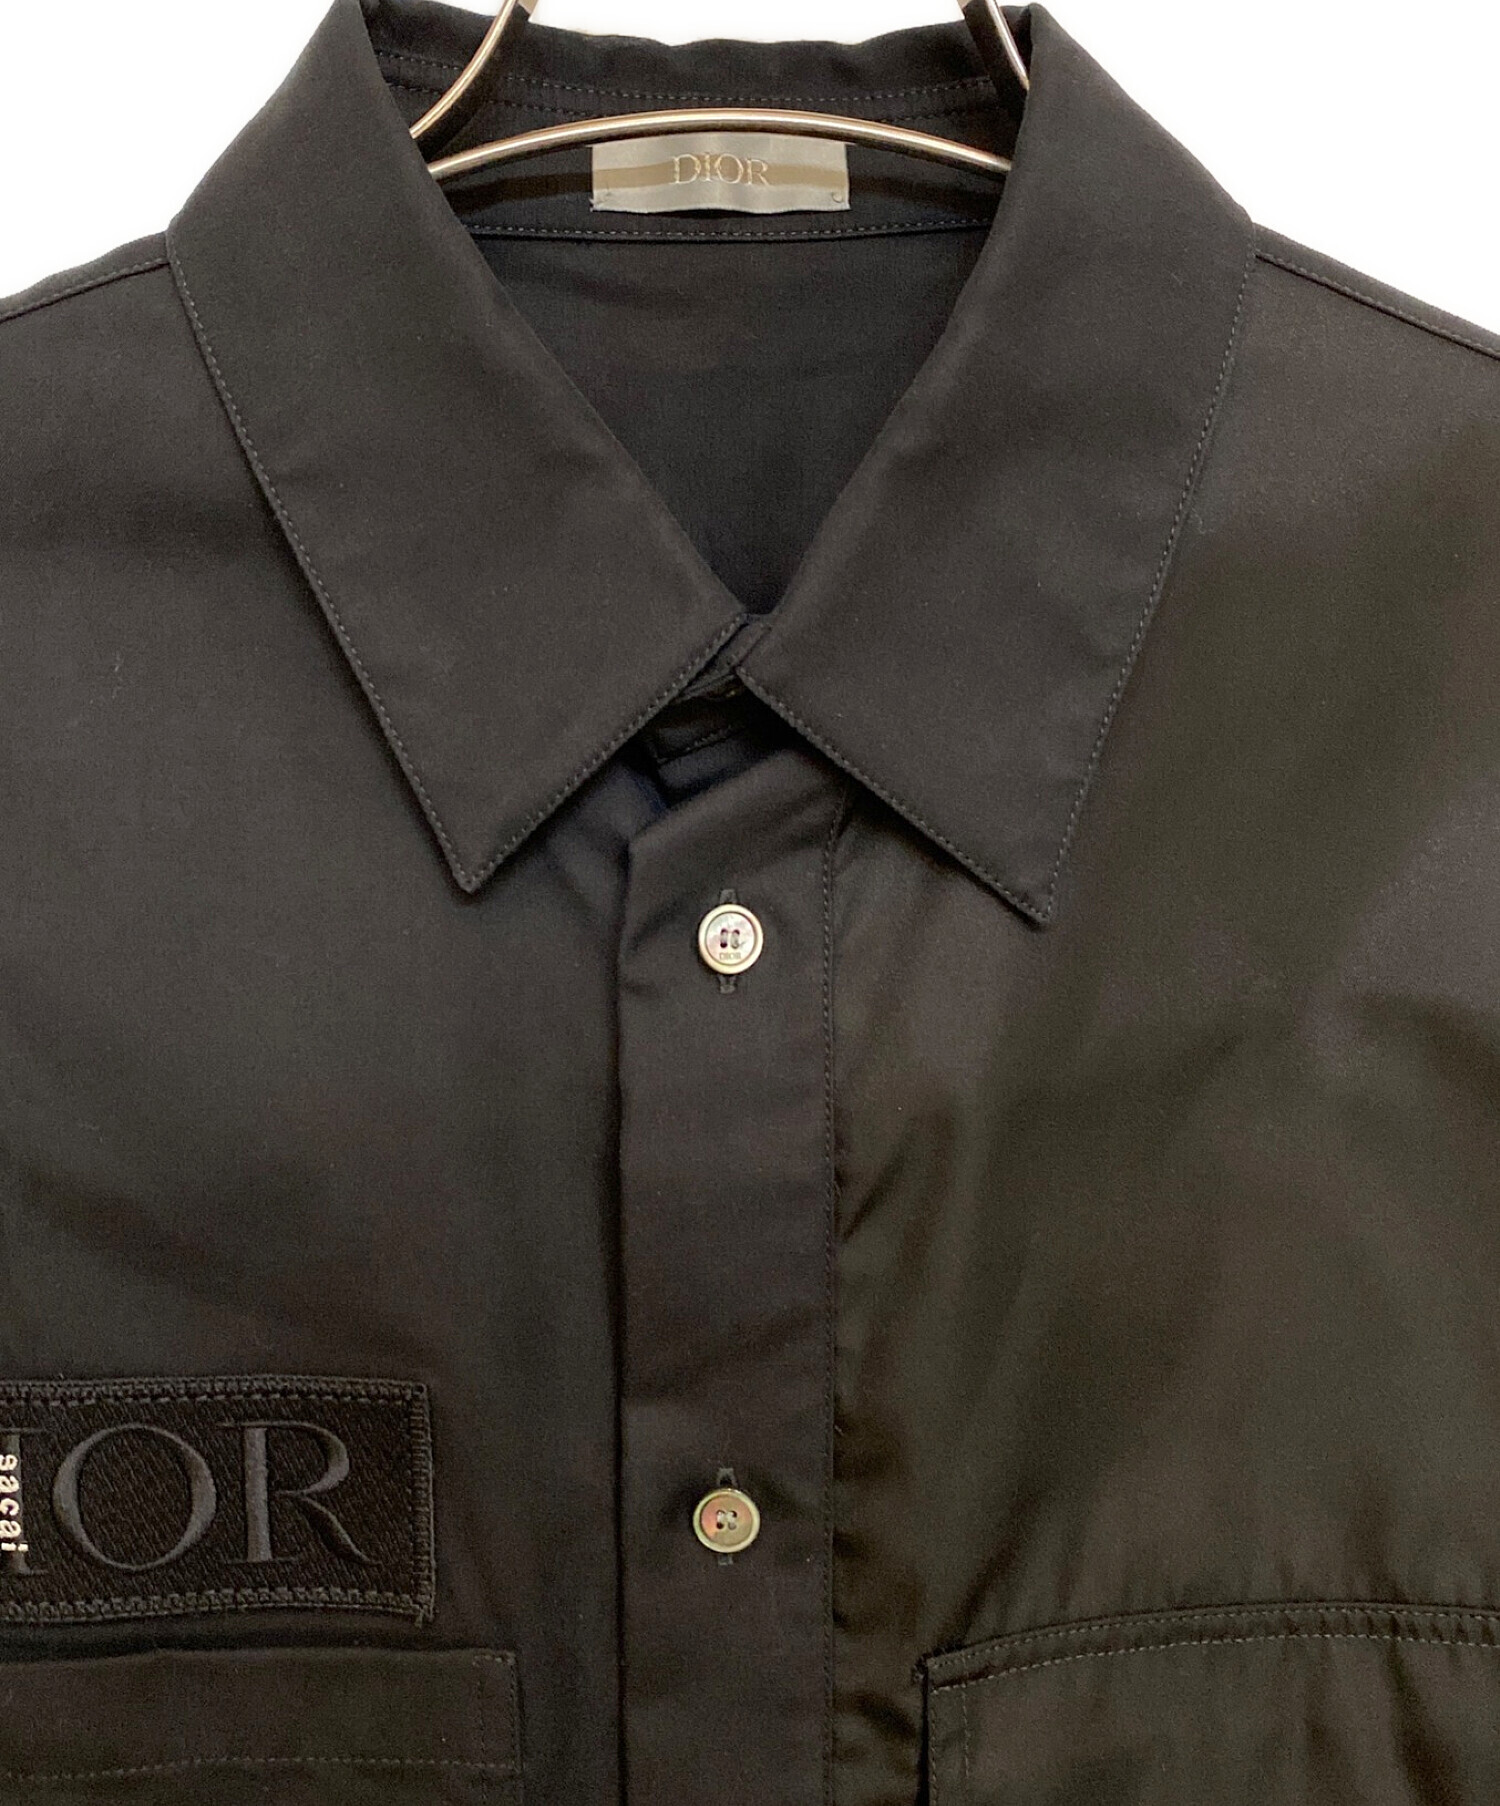 Dior (ディオール) sacai (サカイ) ロゴ刺繍オーバーサイズシャツ ブラック サイズ:41